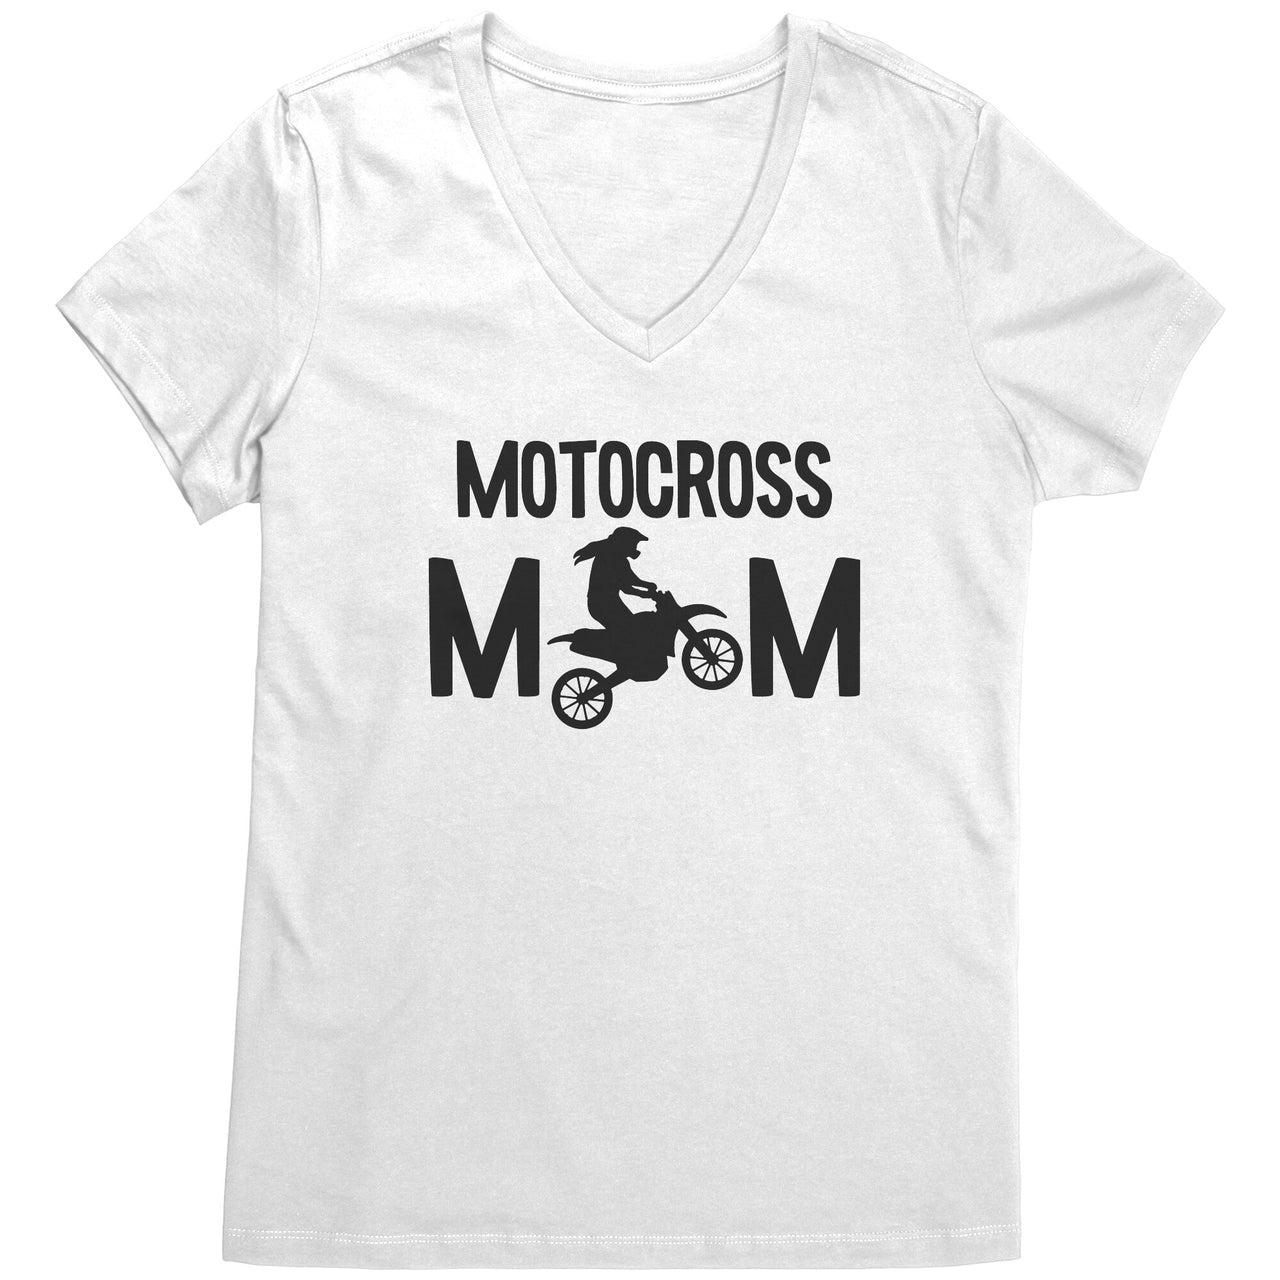 Motocross Mom T-Shirts